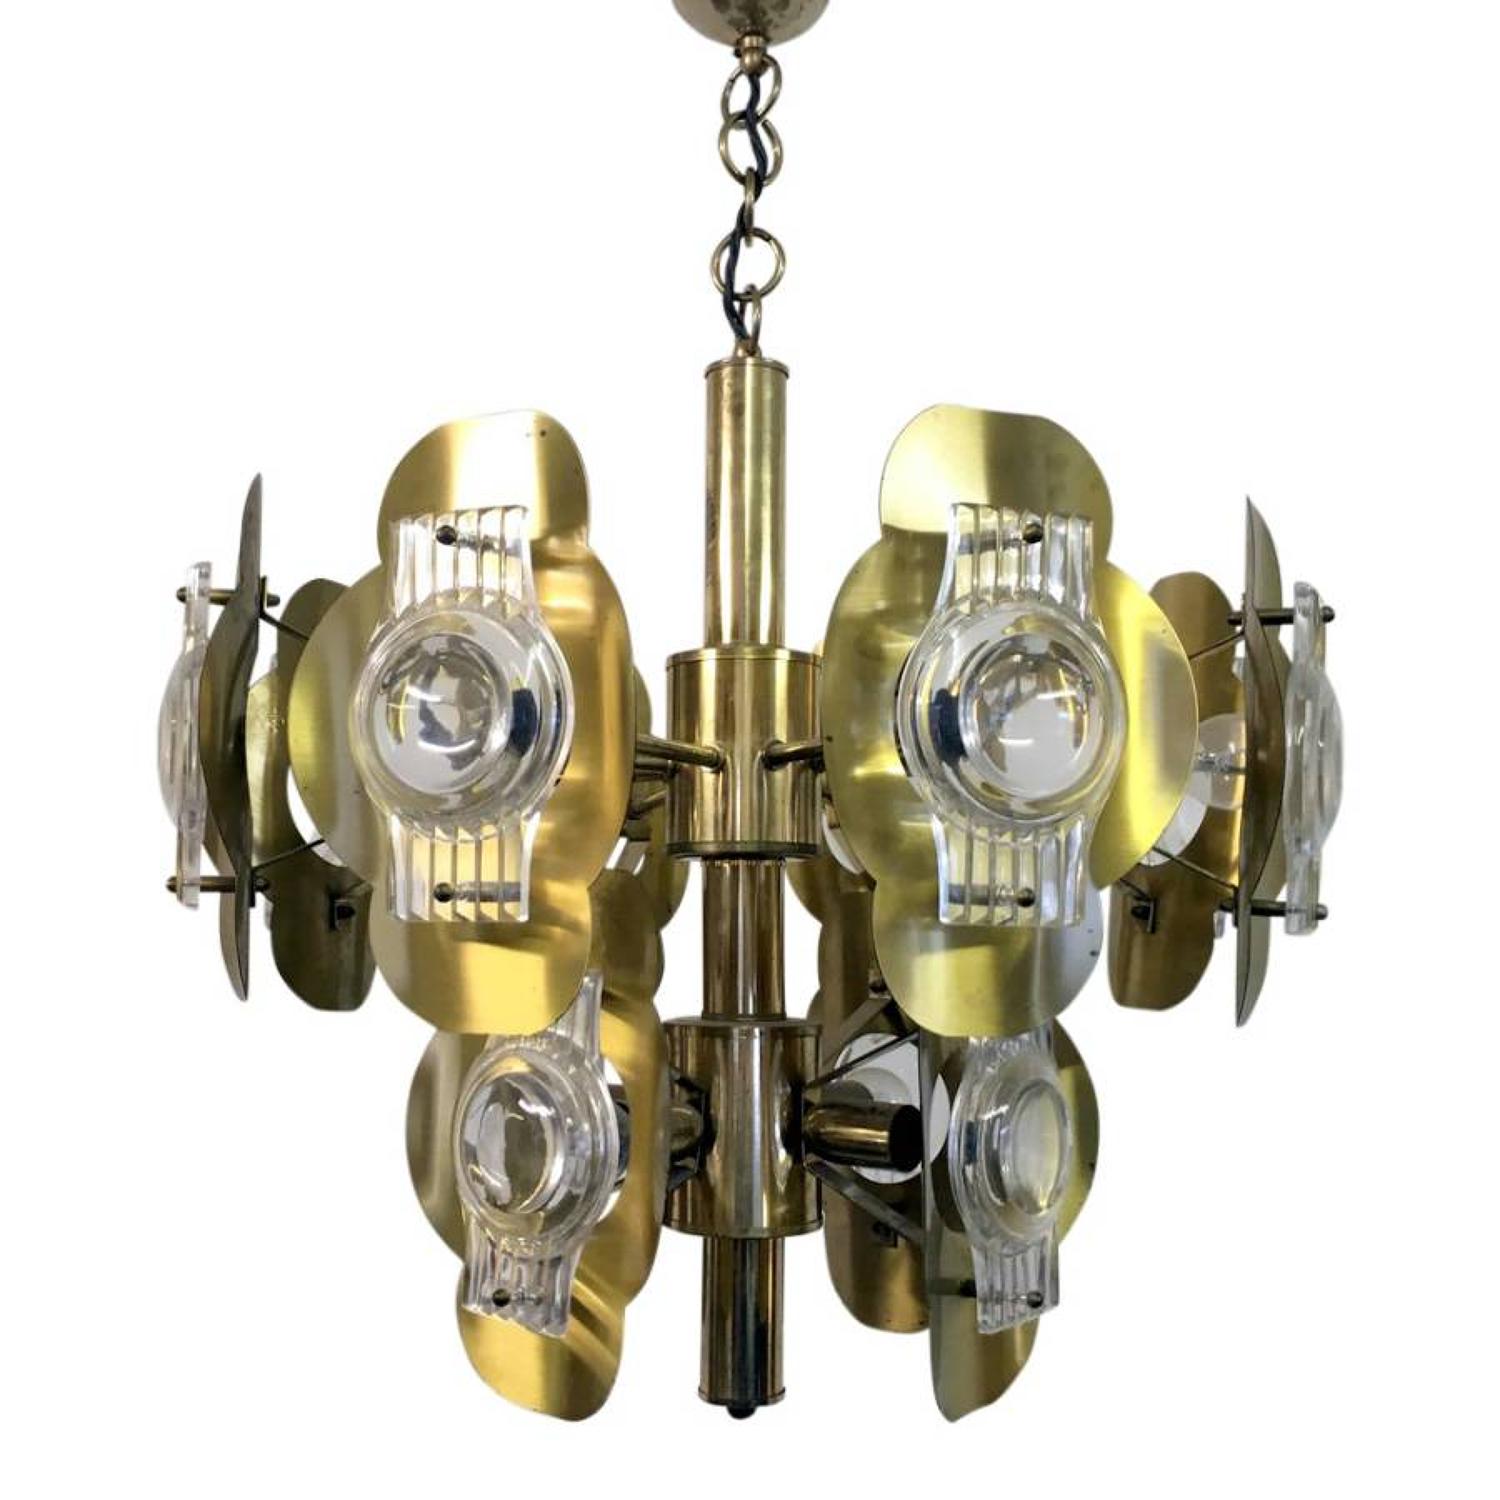 1960s Italian brass and glass chandelier